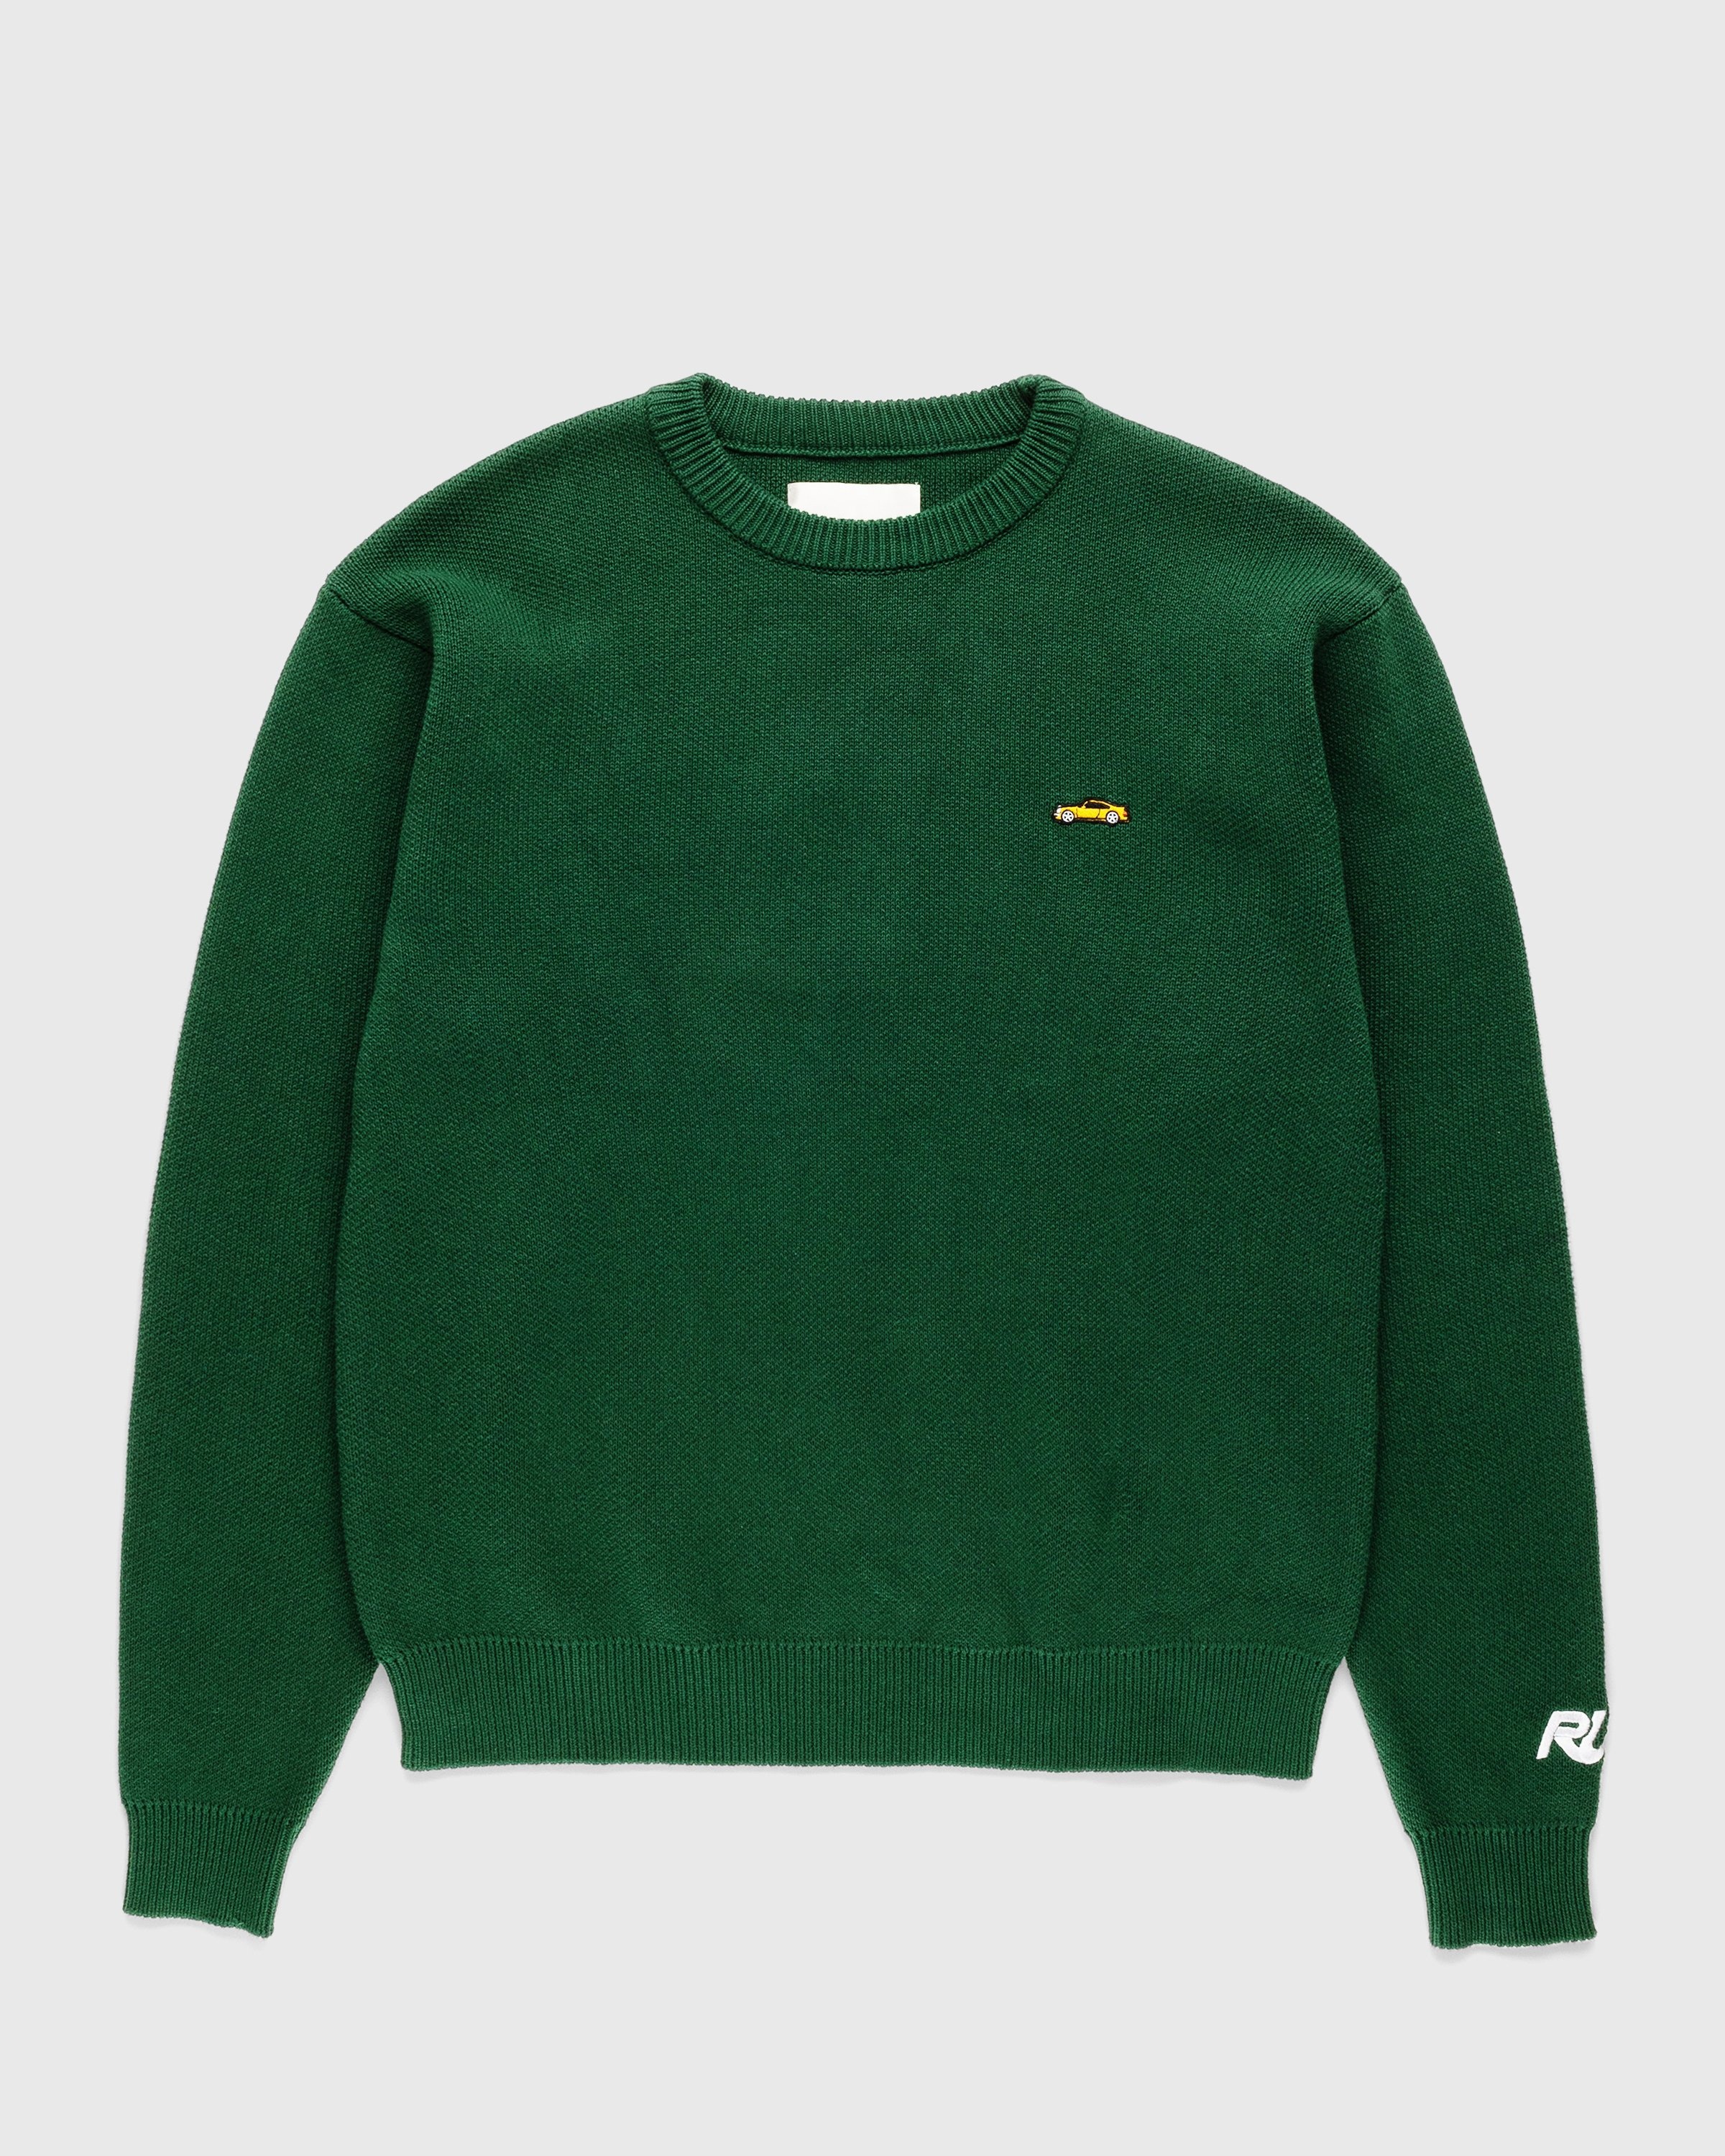 RUF x Highsnobiety – Knitted Crewneck Sweater Green - Knitwear - Green - Image 1